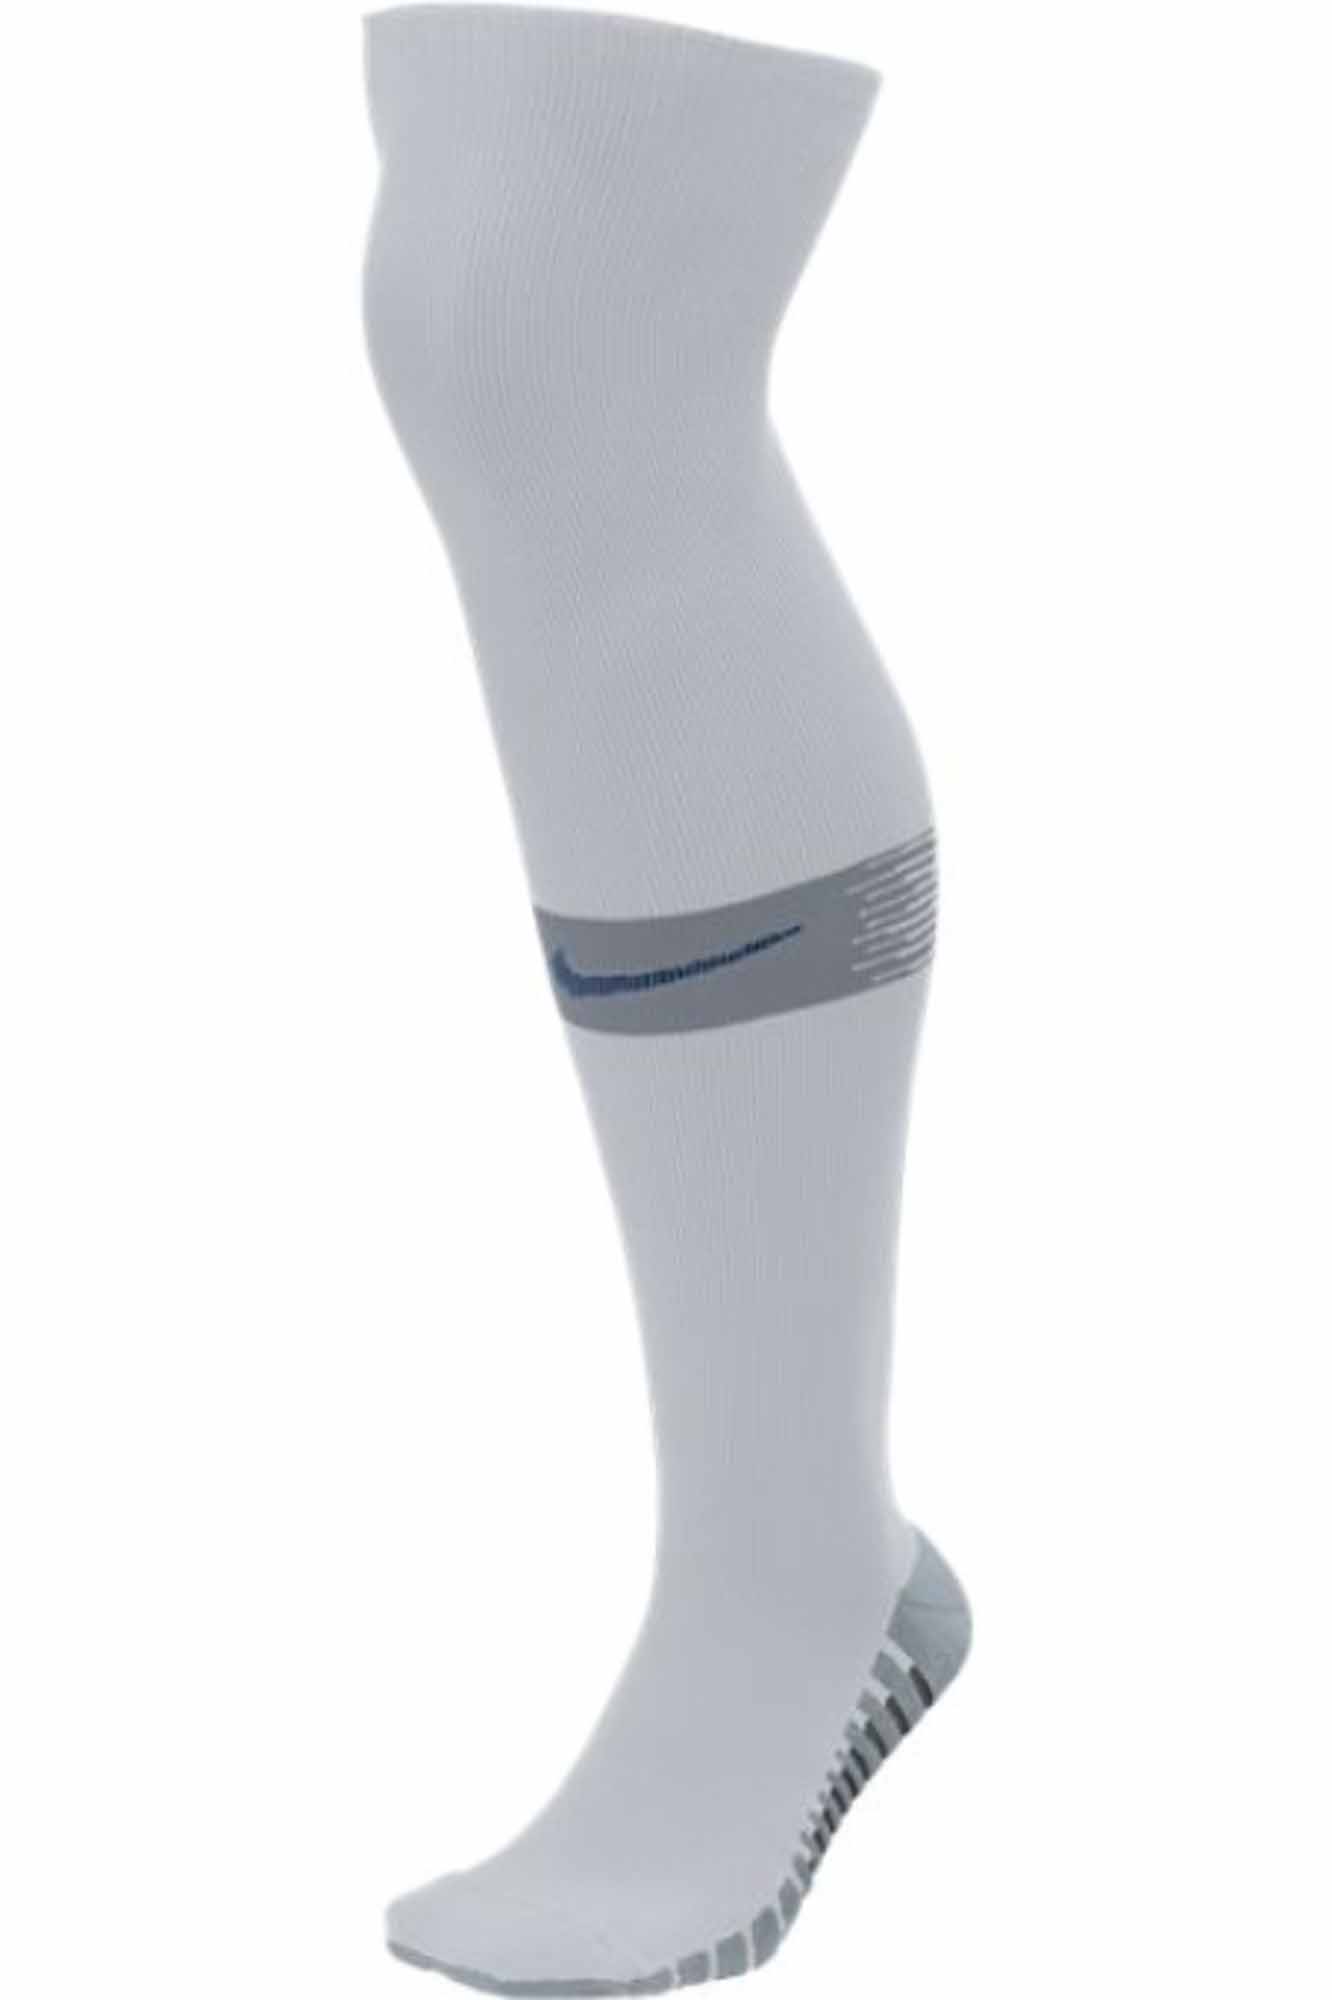 Nike Team Matchfit Soccer Socks - Pure Platinum/Cool Grey - SoccerPro